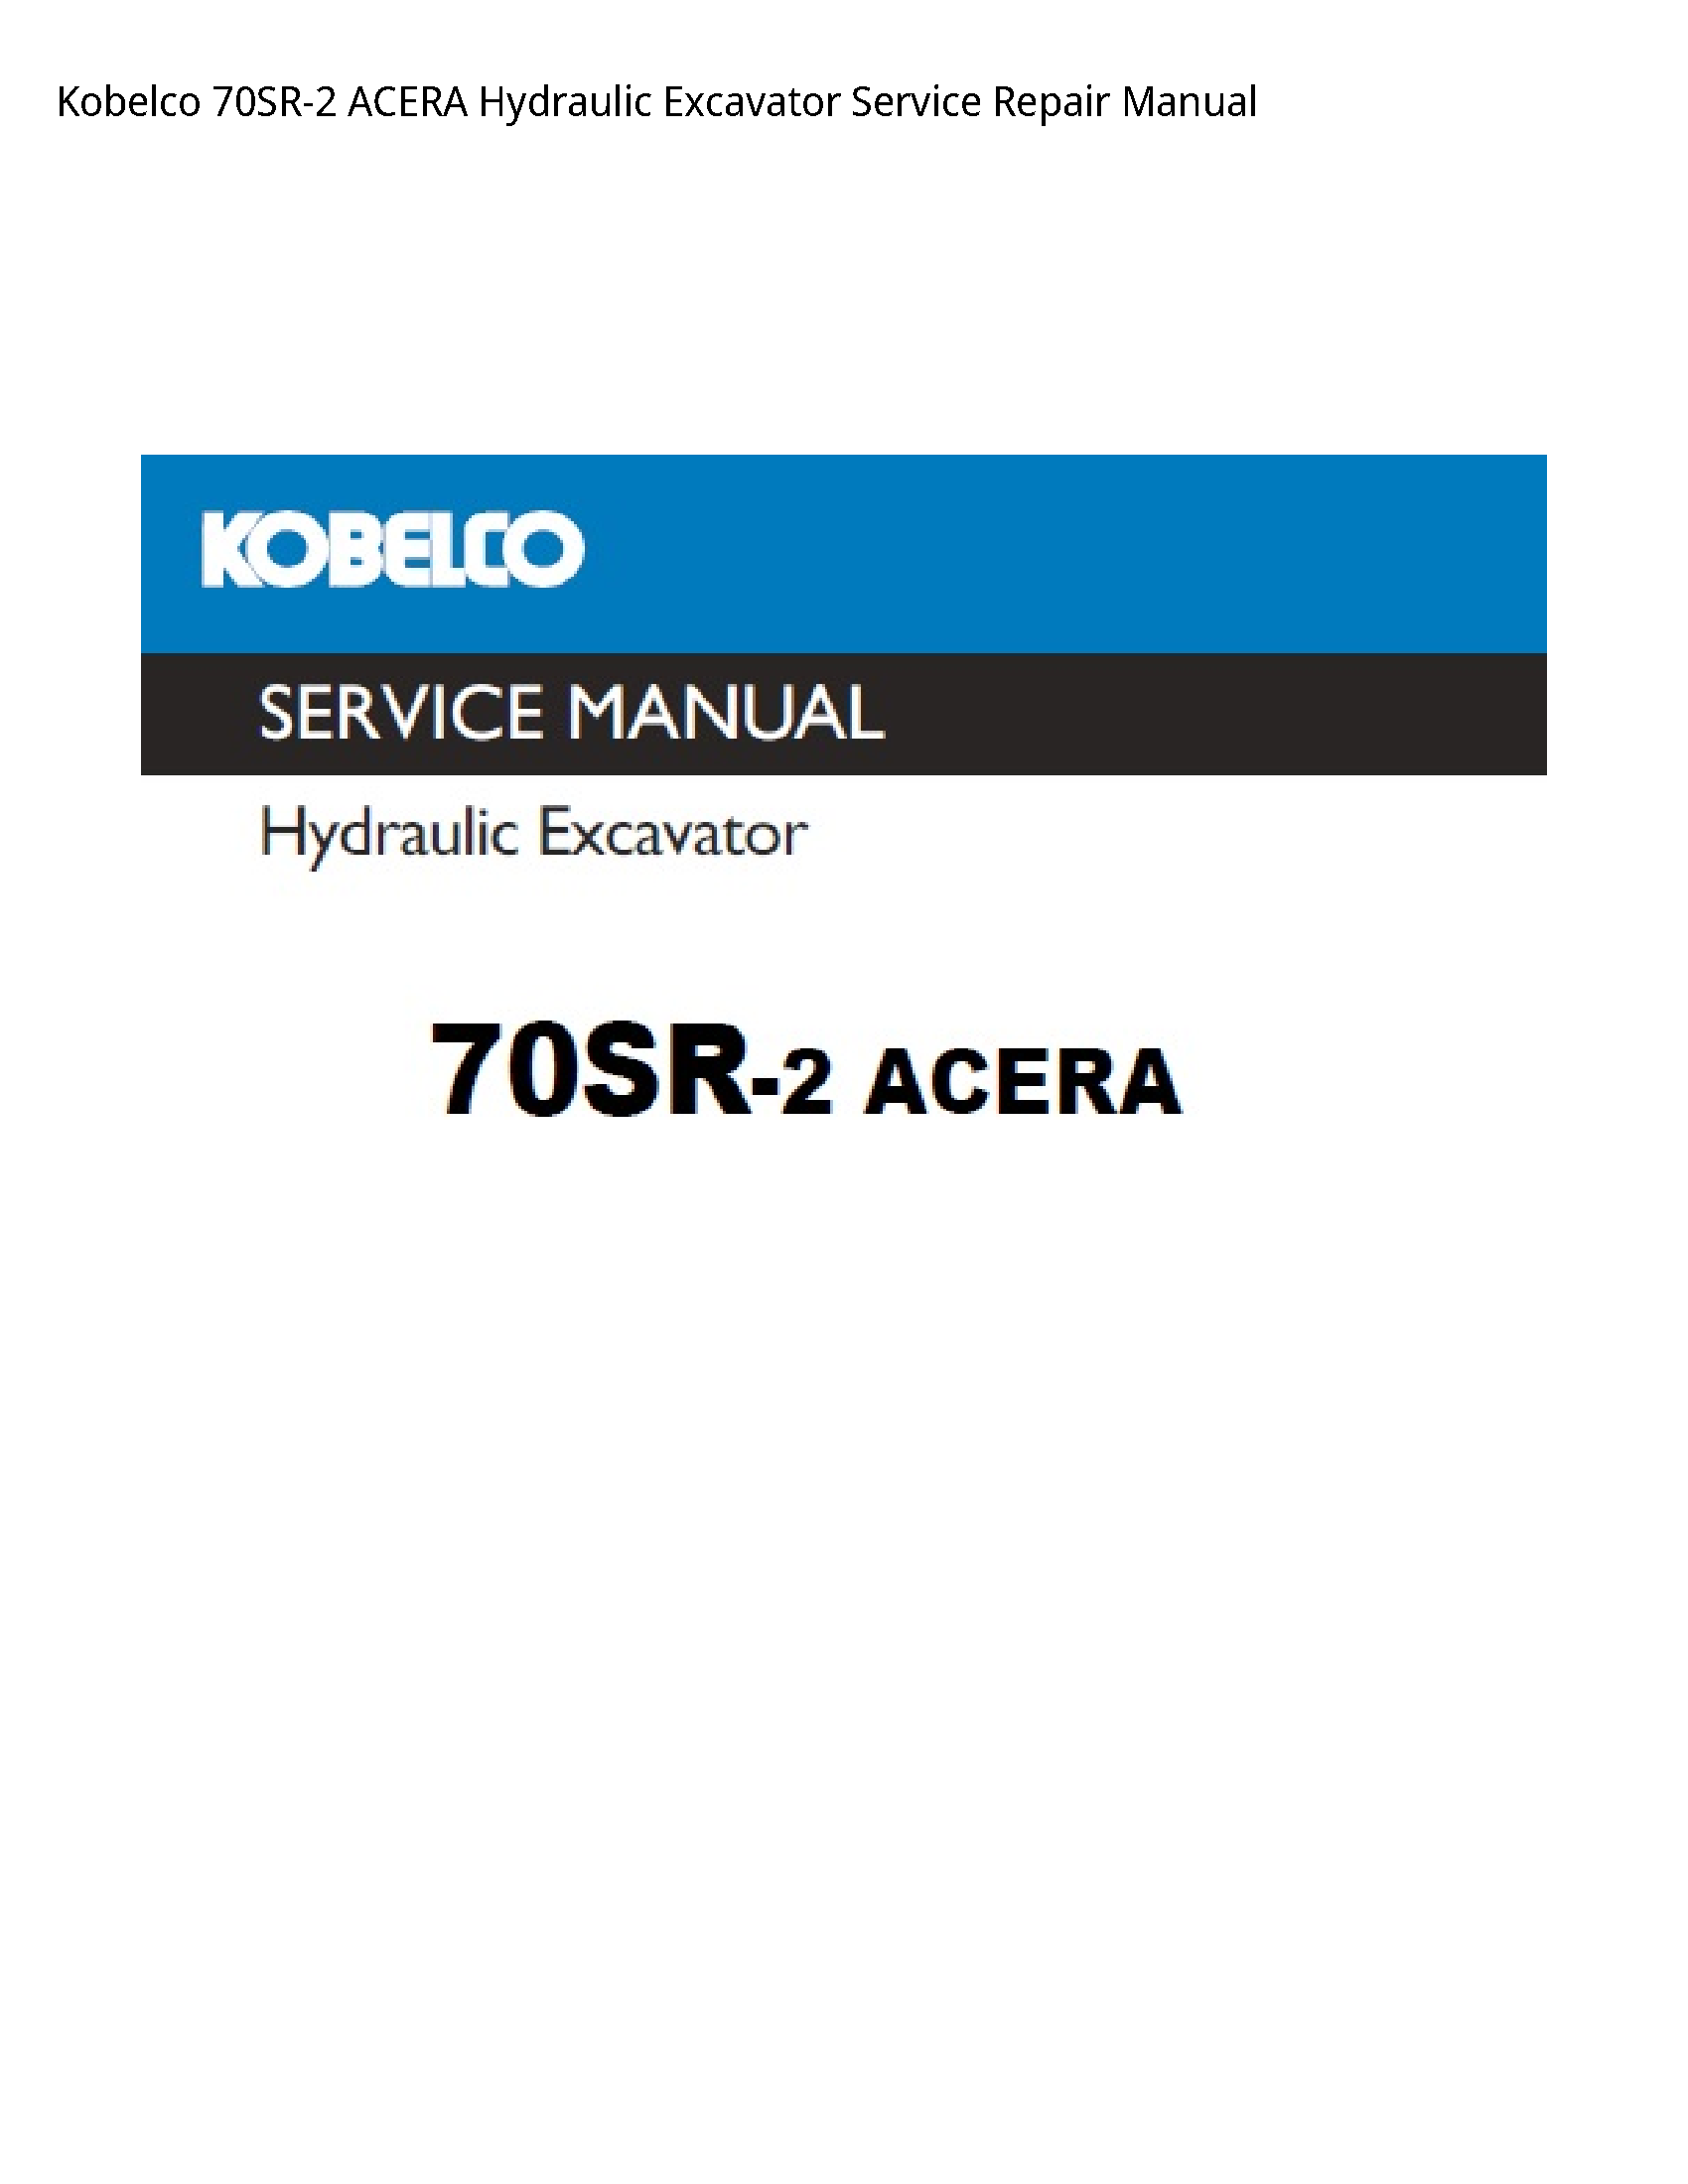 Kobelco 70SR-2 ACERA Hydraulic Excavator manual